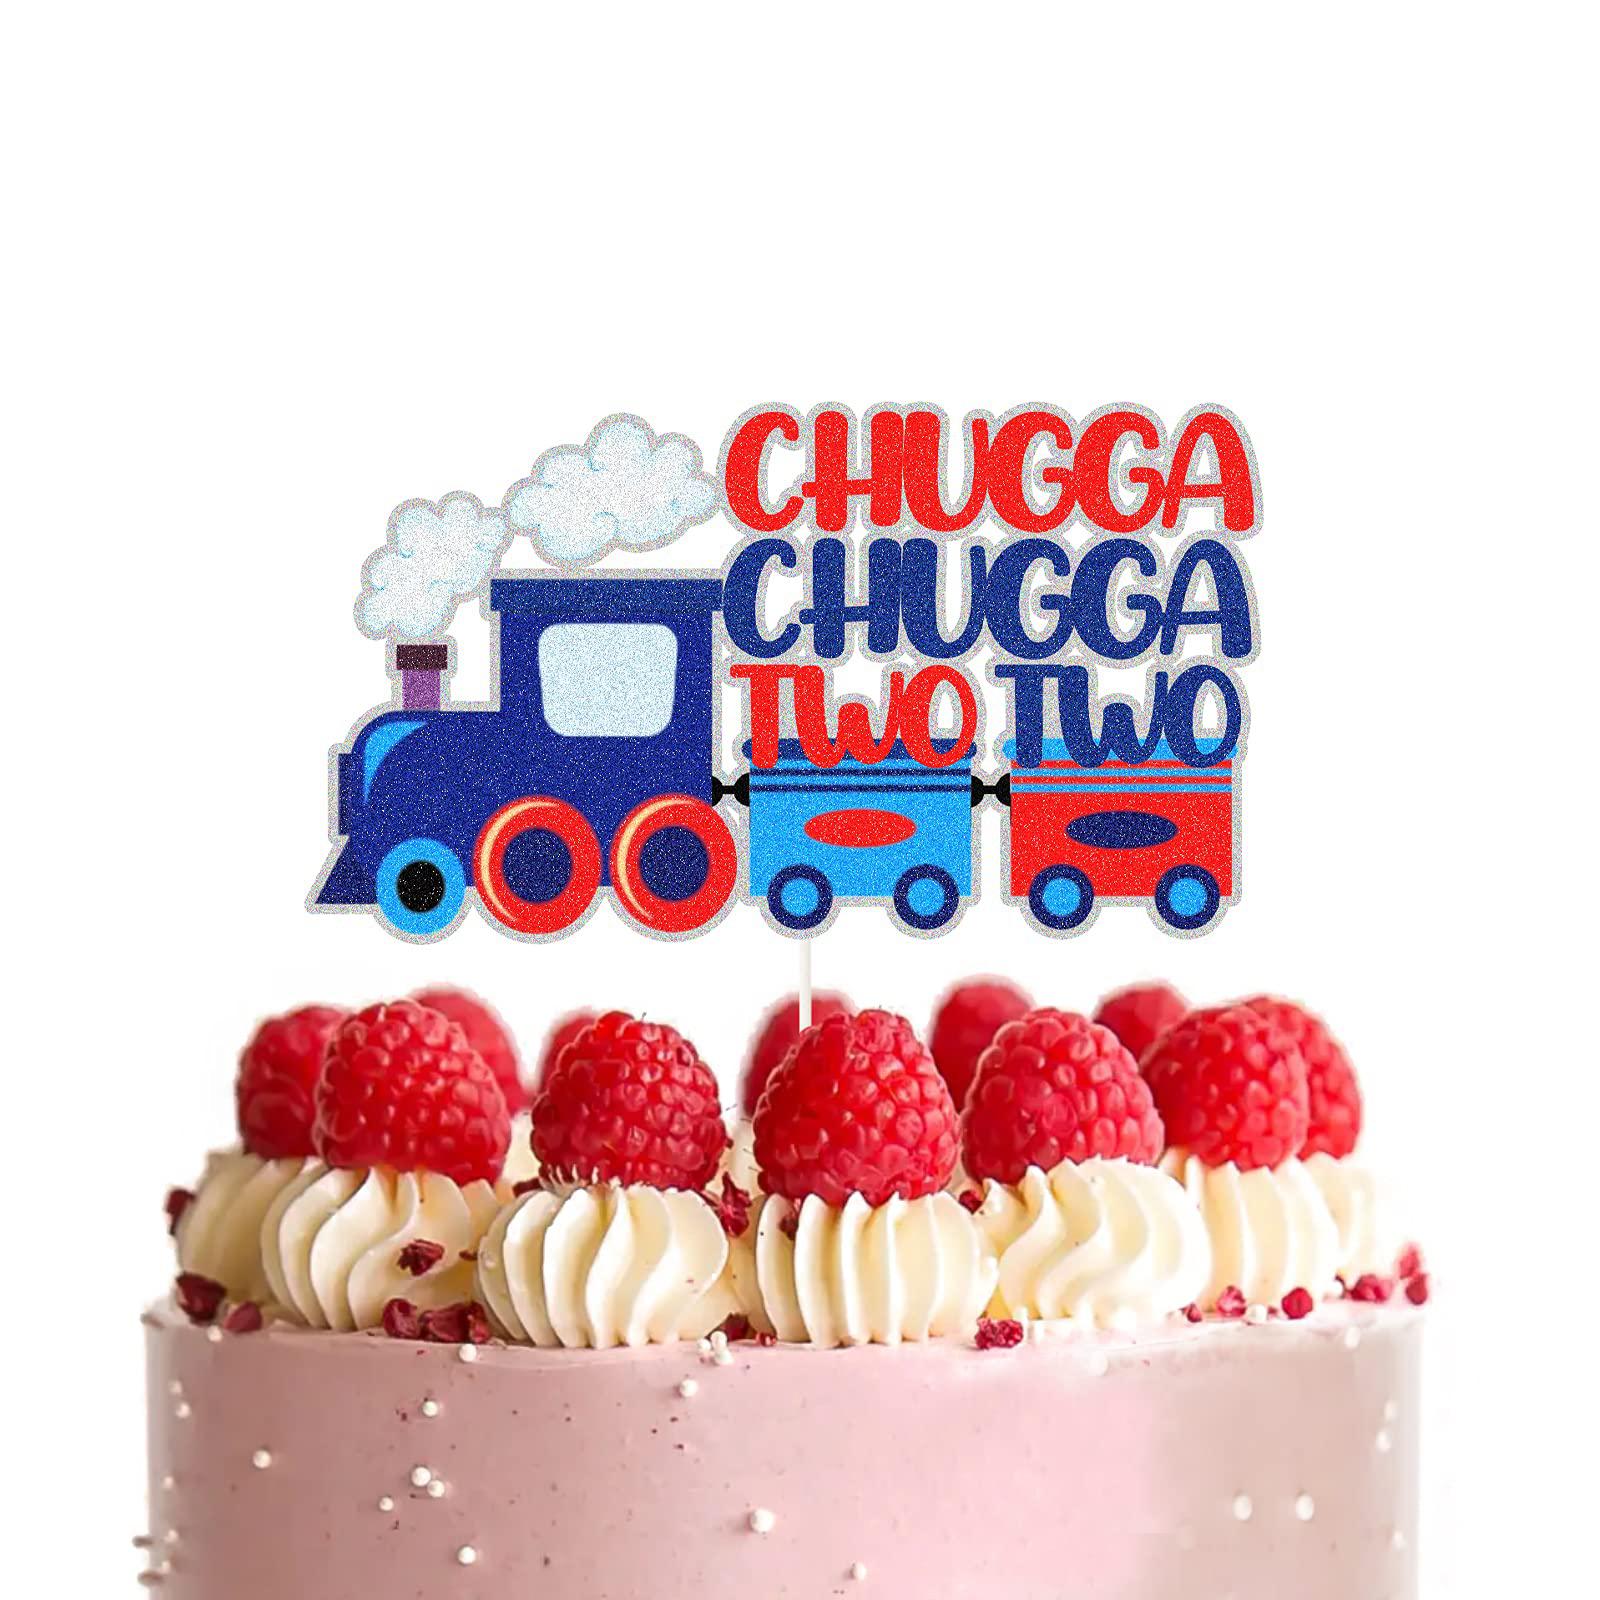 whpct chugga chugga tow tow cake topper,2nd train theme birthday cake decorations,steam train tow years old birthday party de